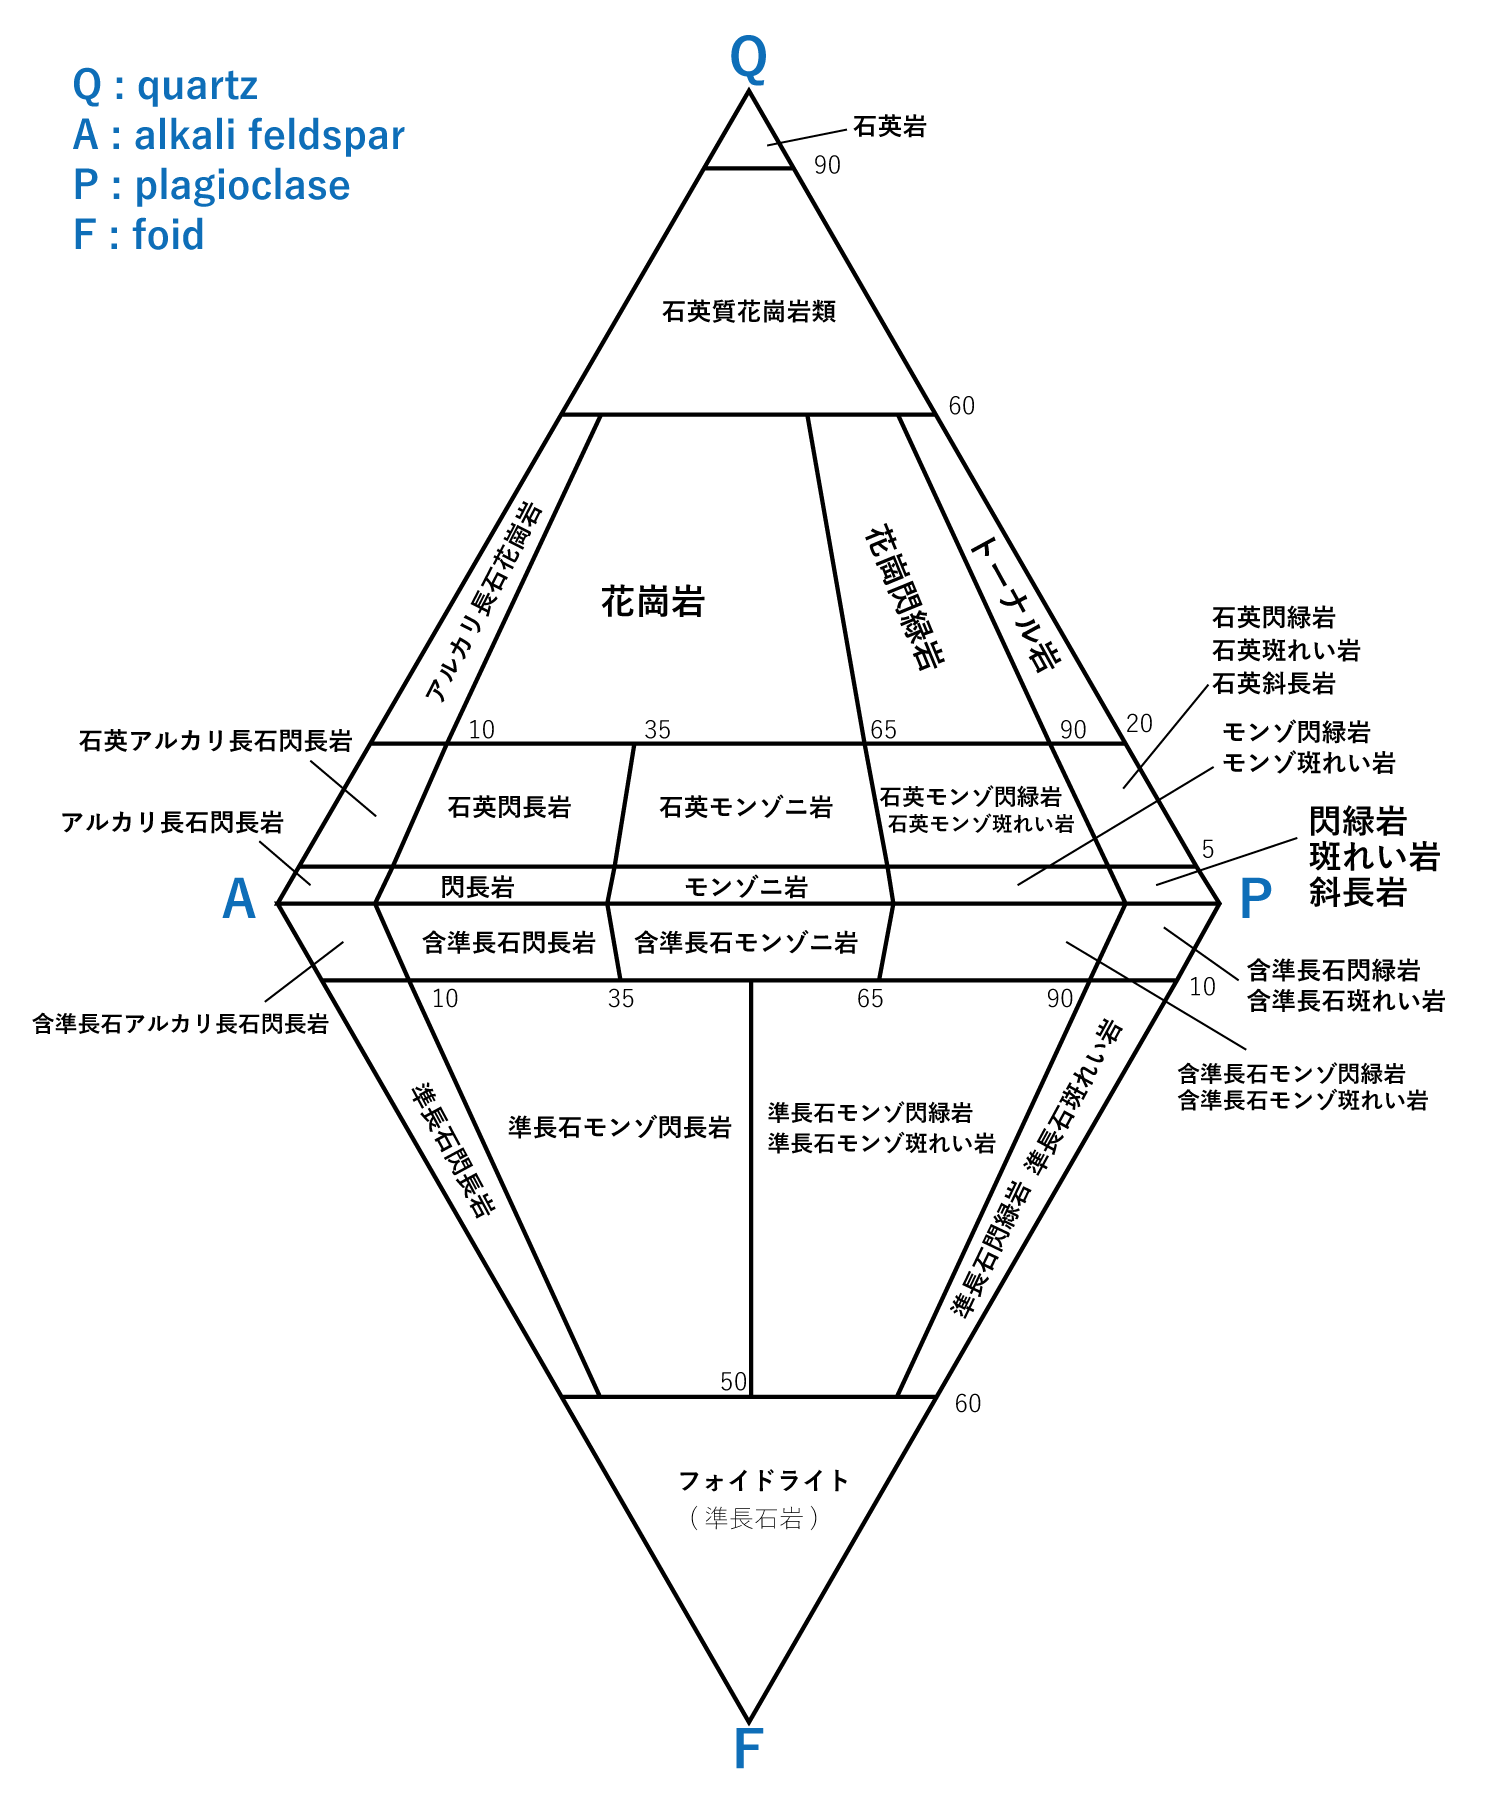 QAPF図 花崗岩類の分類 日本語